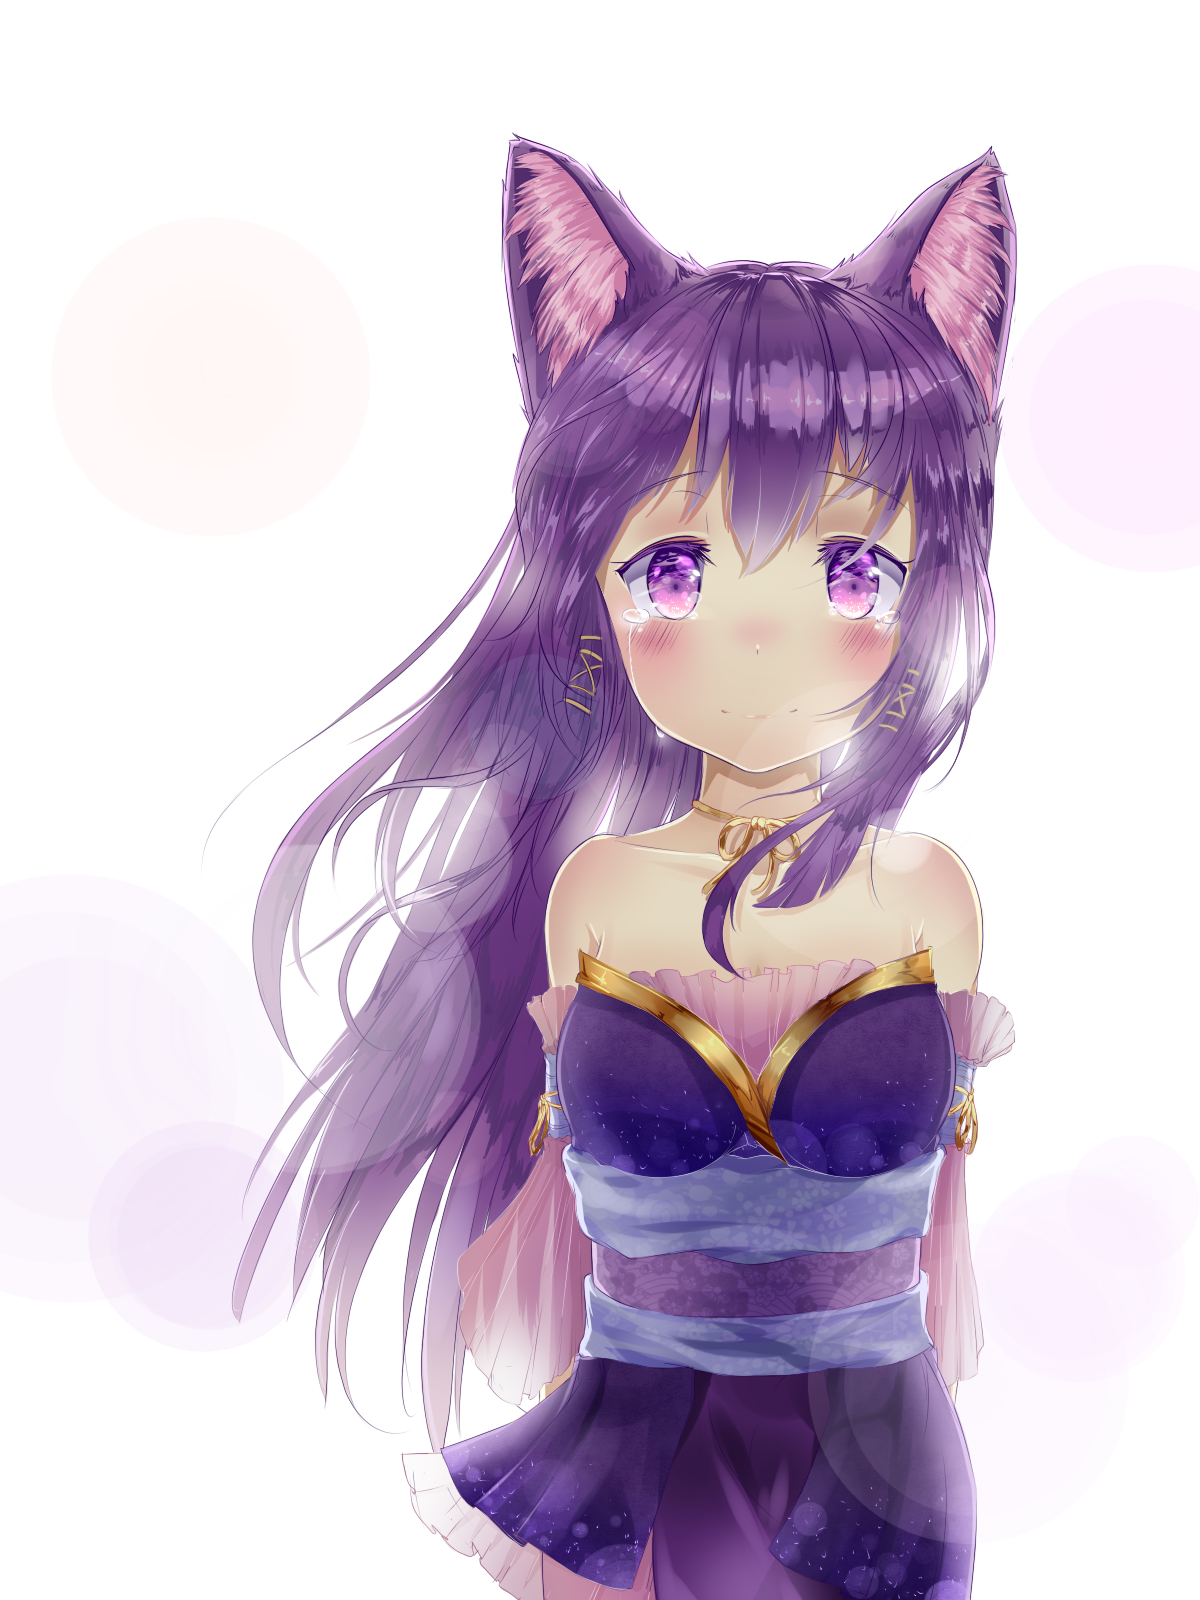 tan anime girl with purple hair